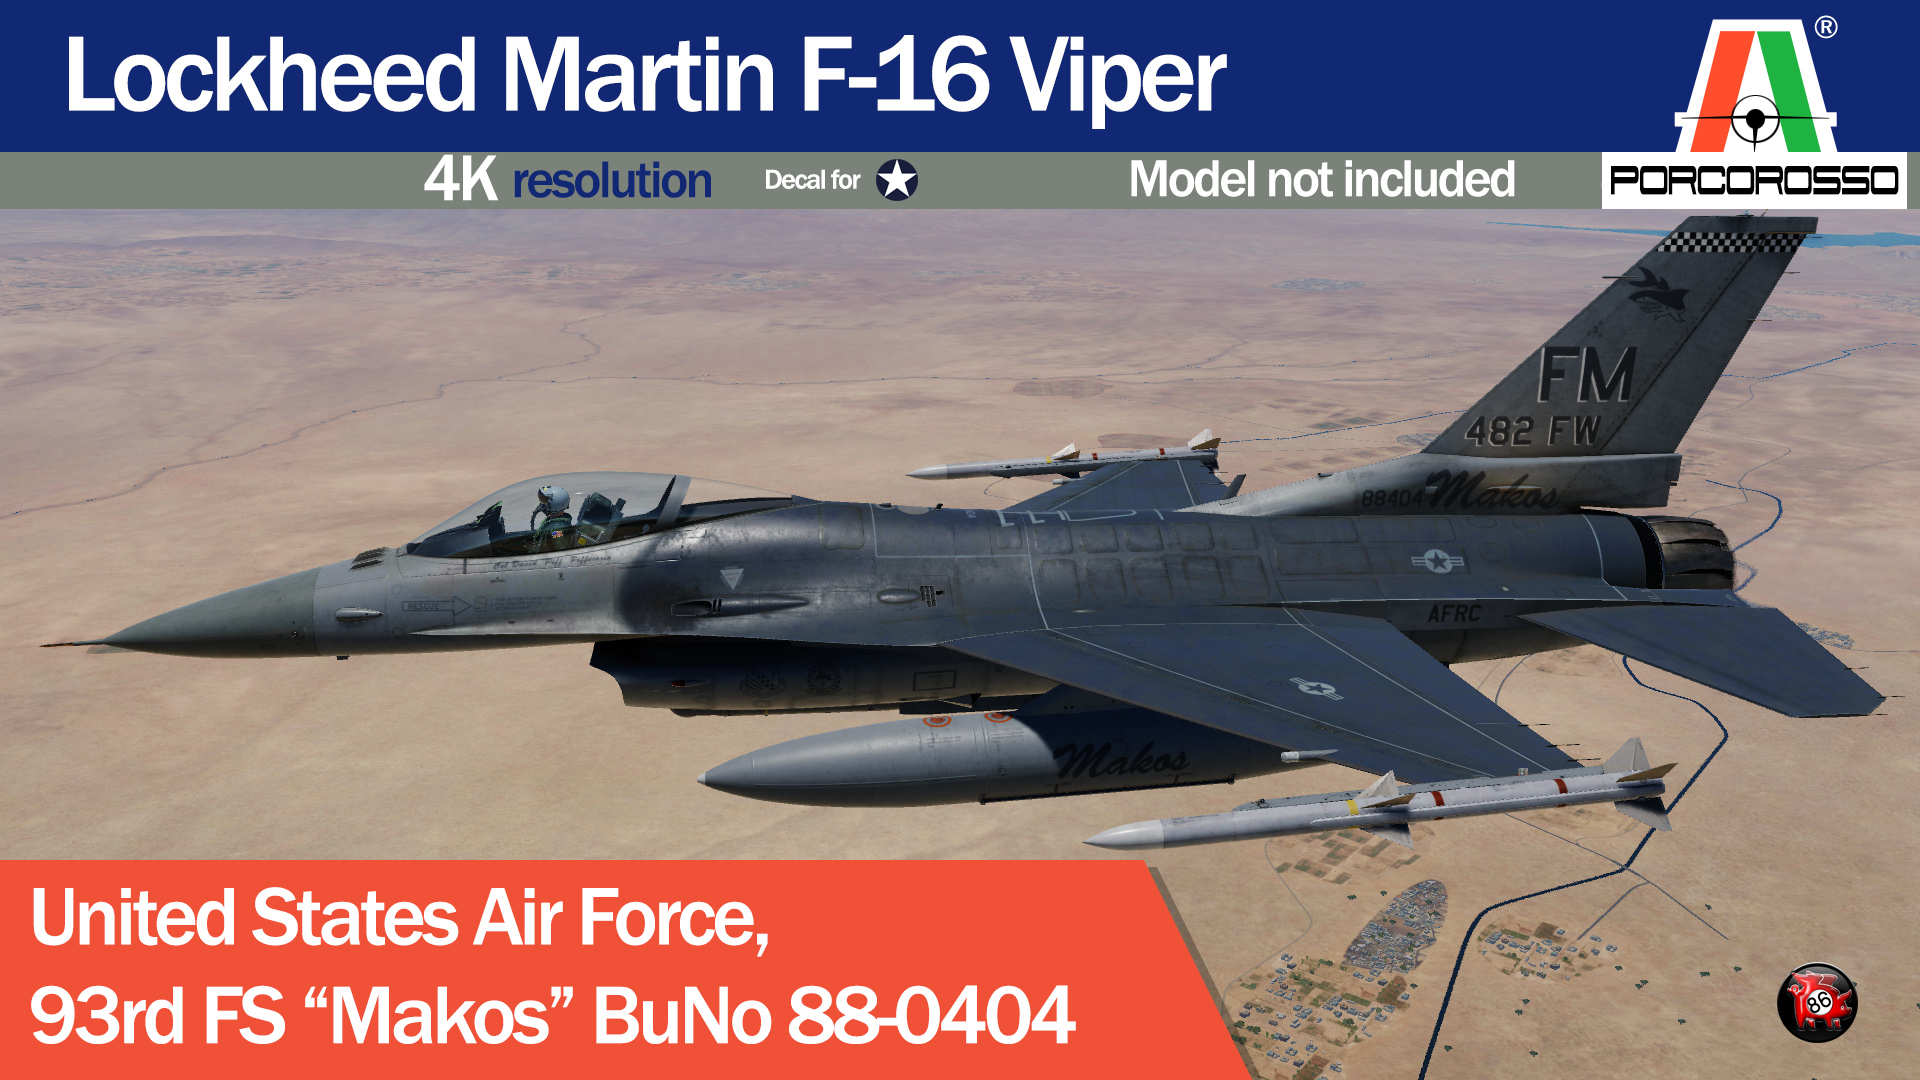 USAF 93rd FS "Makos" Serial No. 88-0404 by PorcoRosso86 UPDATE 